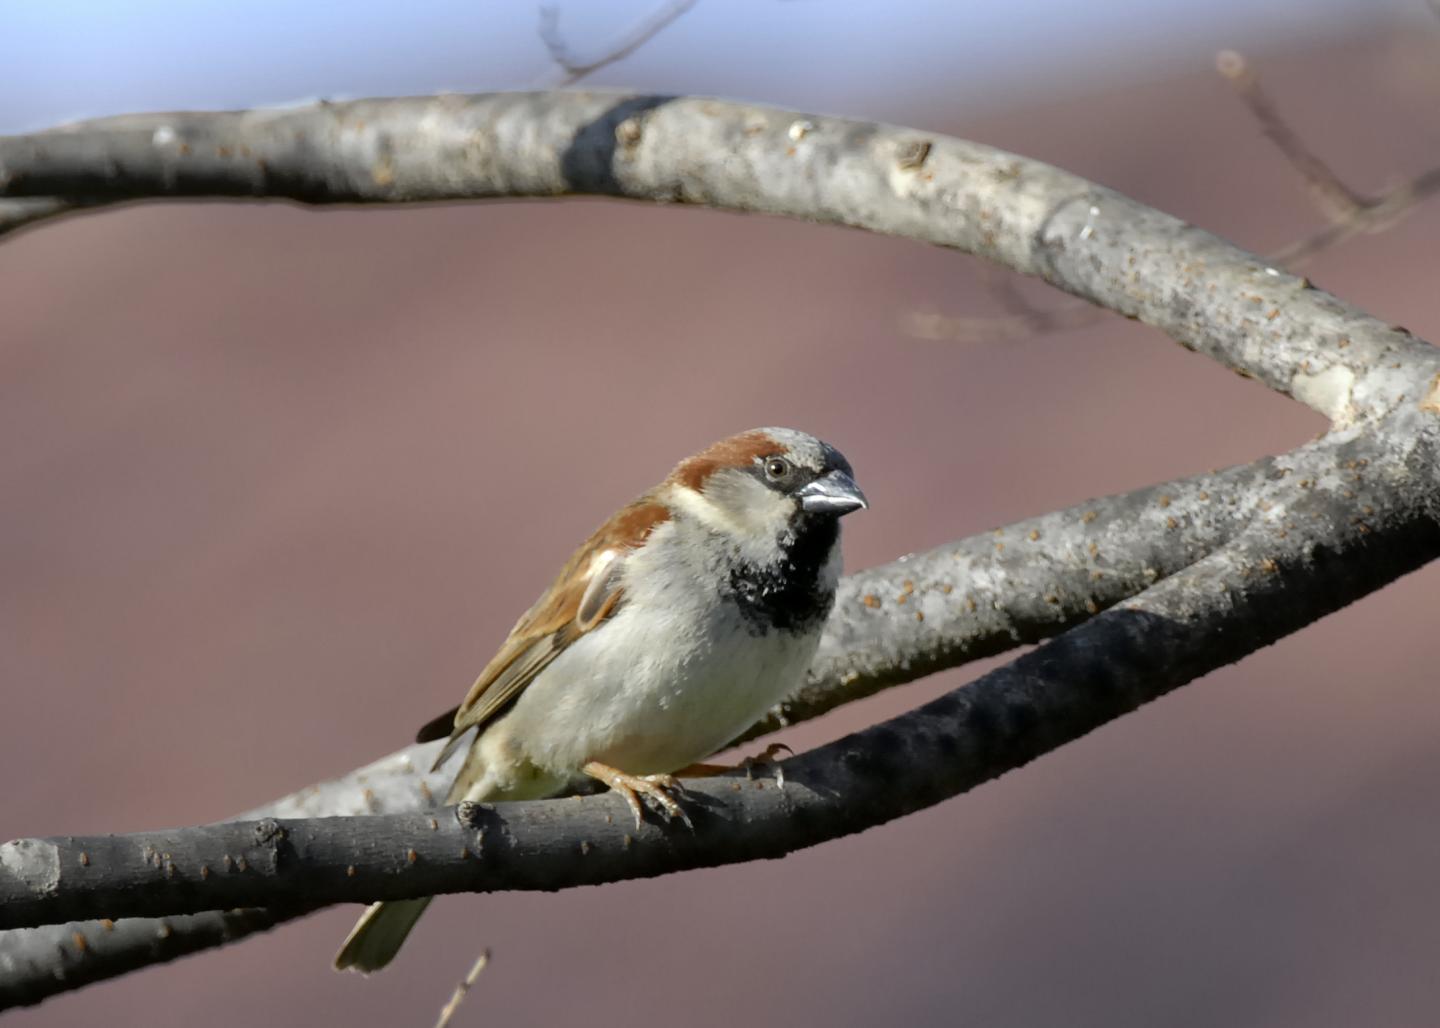 Male European House Sparrow